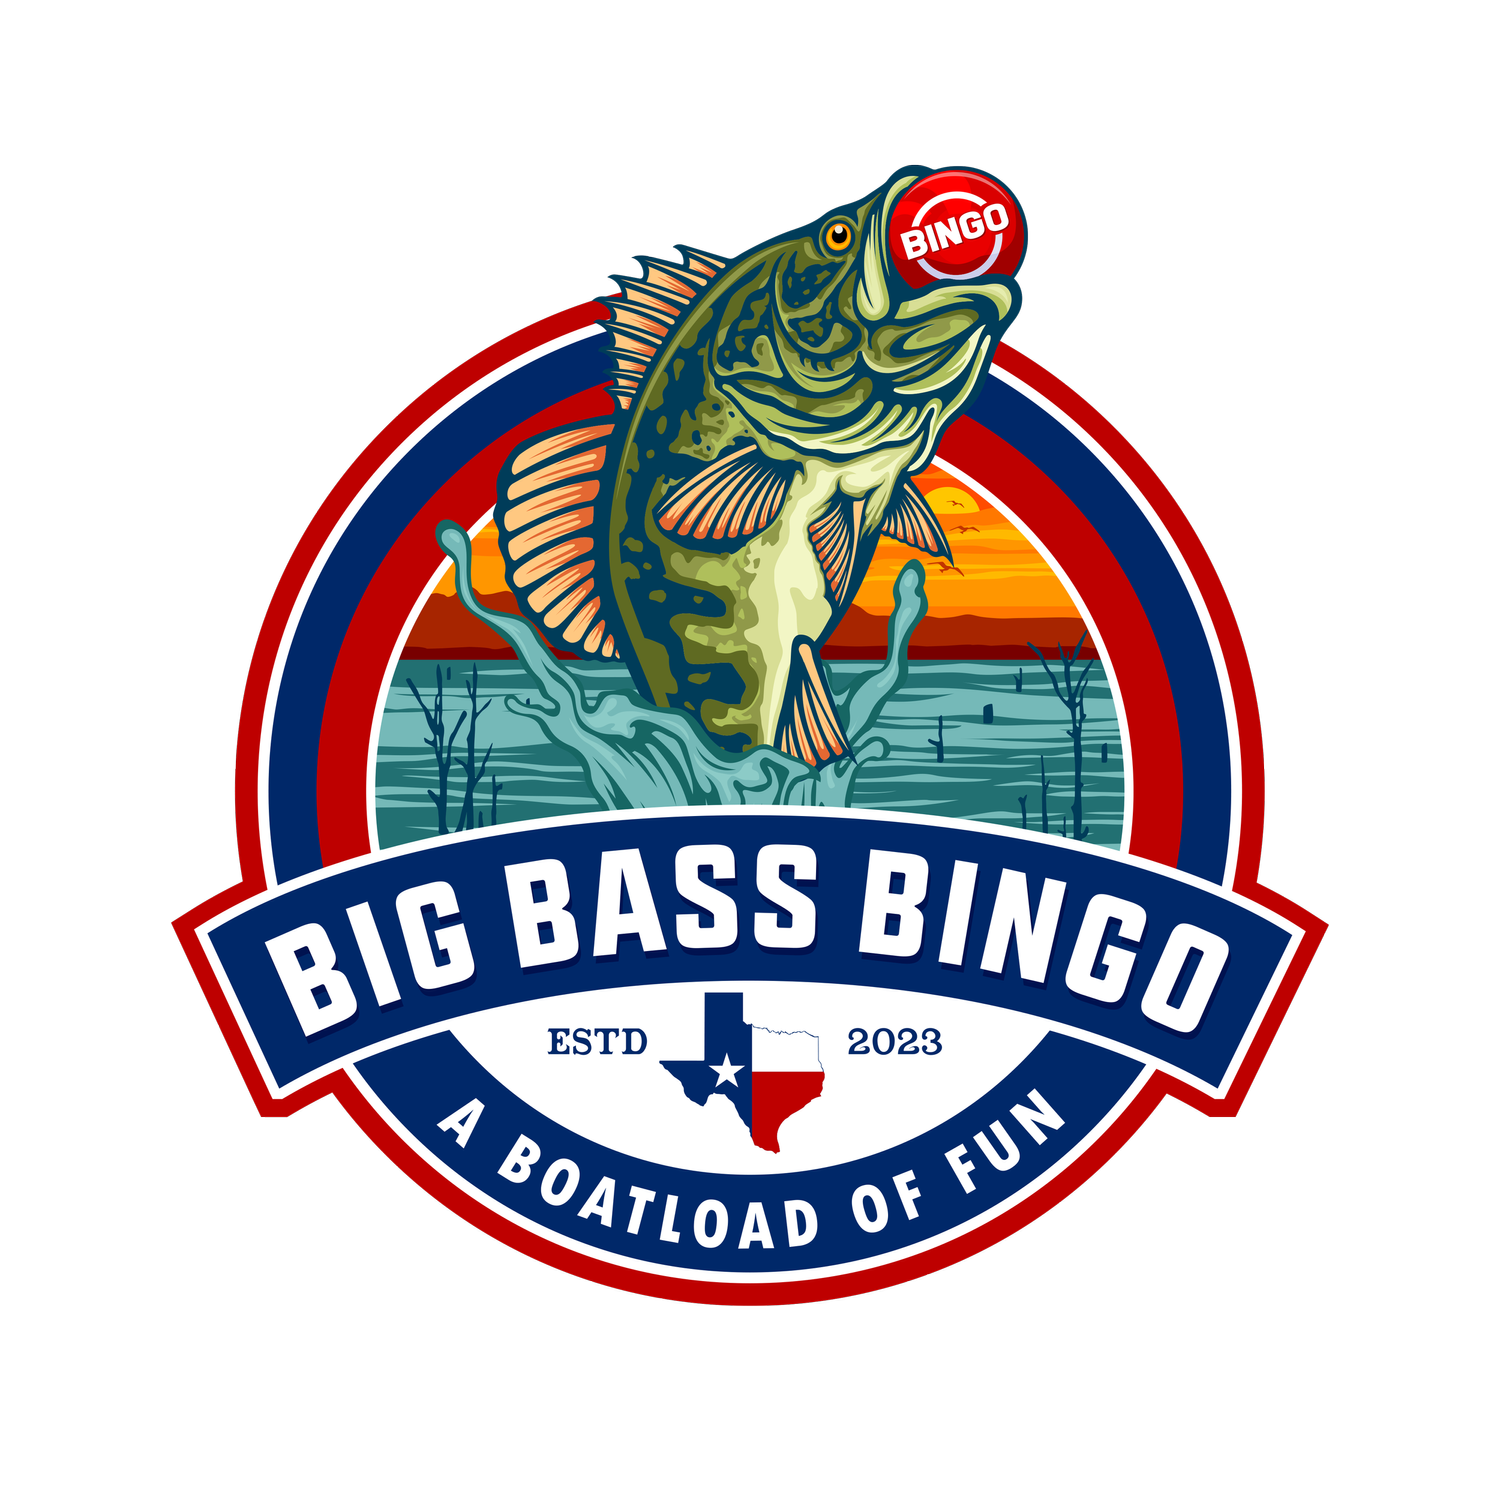 Big Bass Bingo